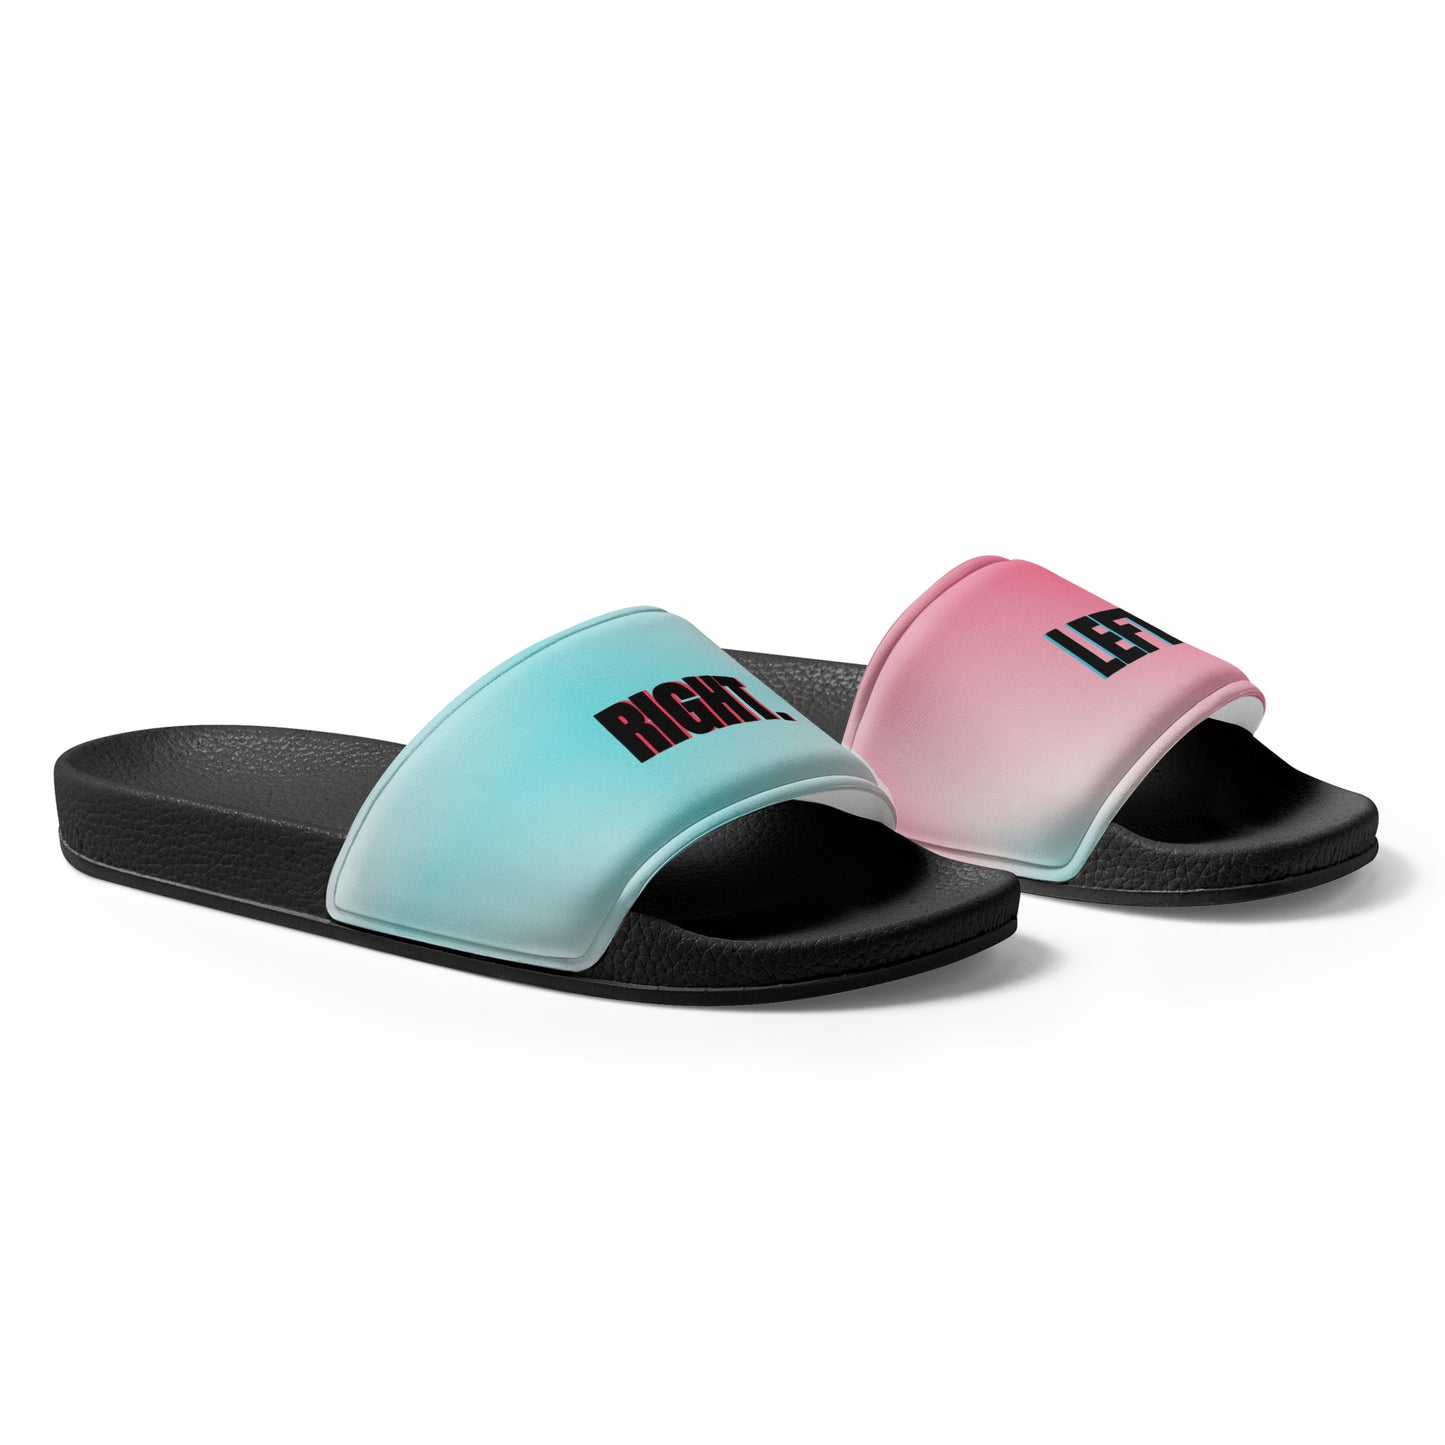 #bluecatmax Men's Slides Comfortable Contoured Footbed 7-12.5